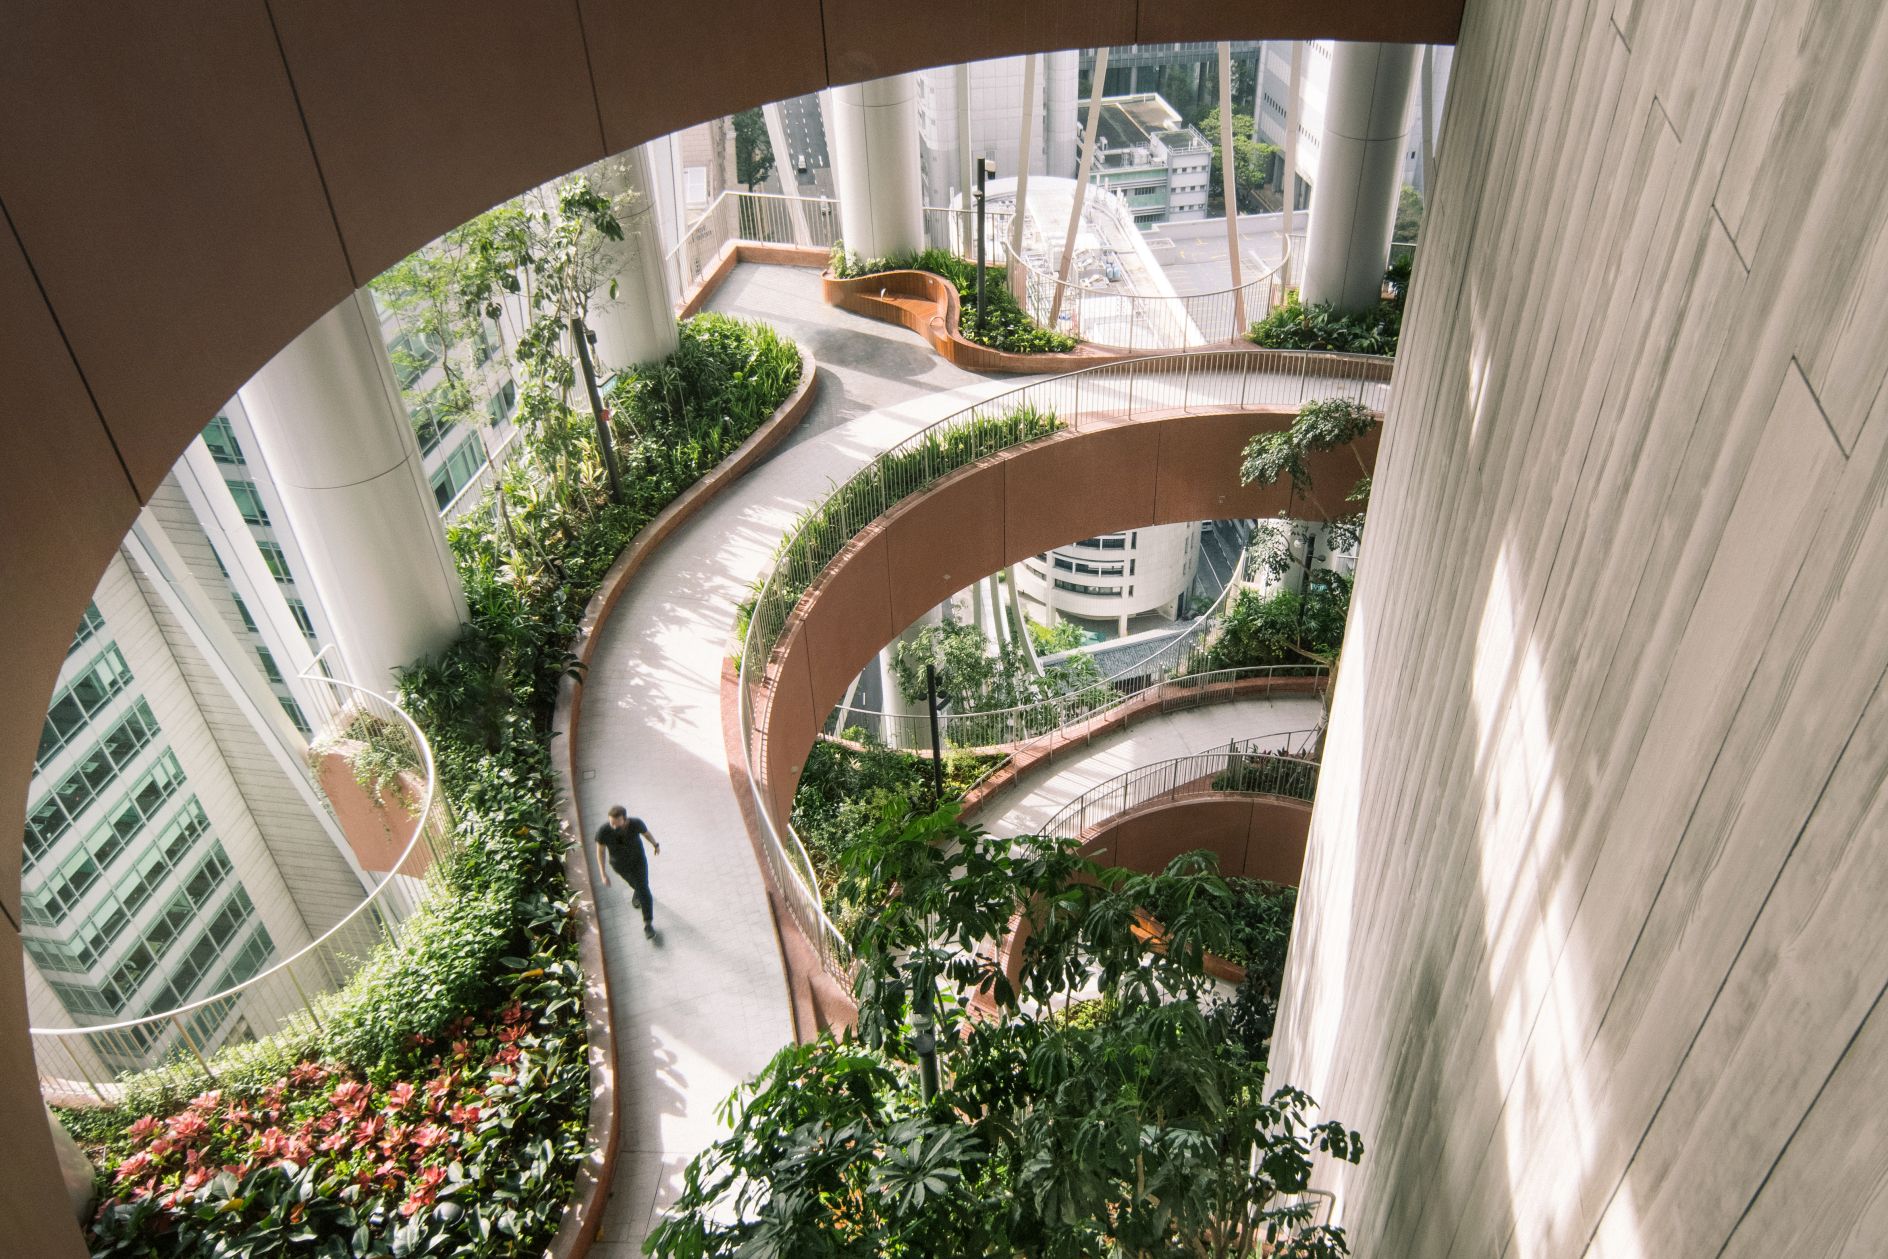 Design Bridge's identity for Singapore's latest iconic building ...